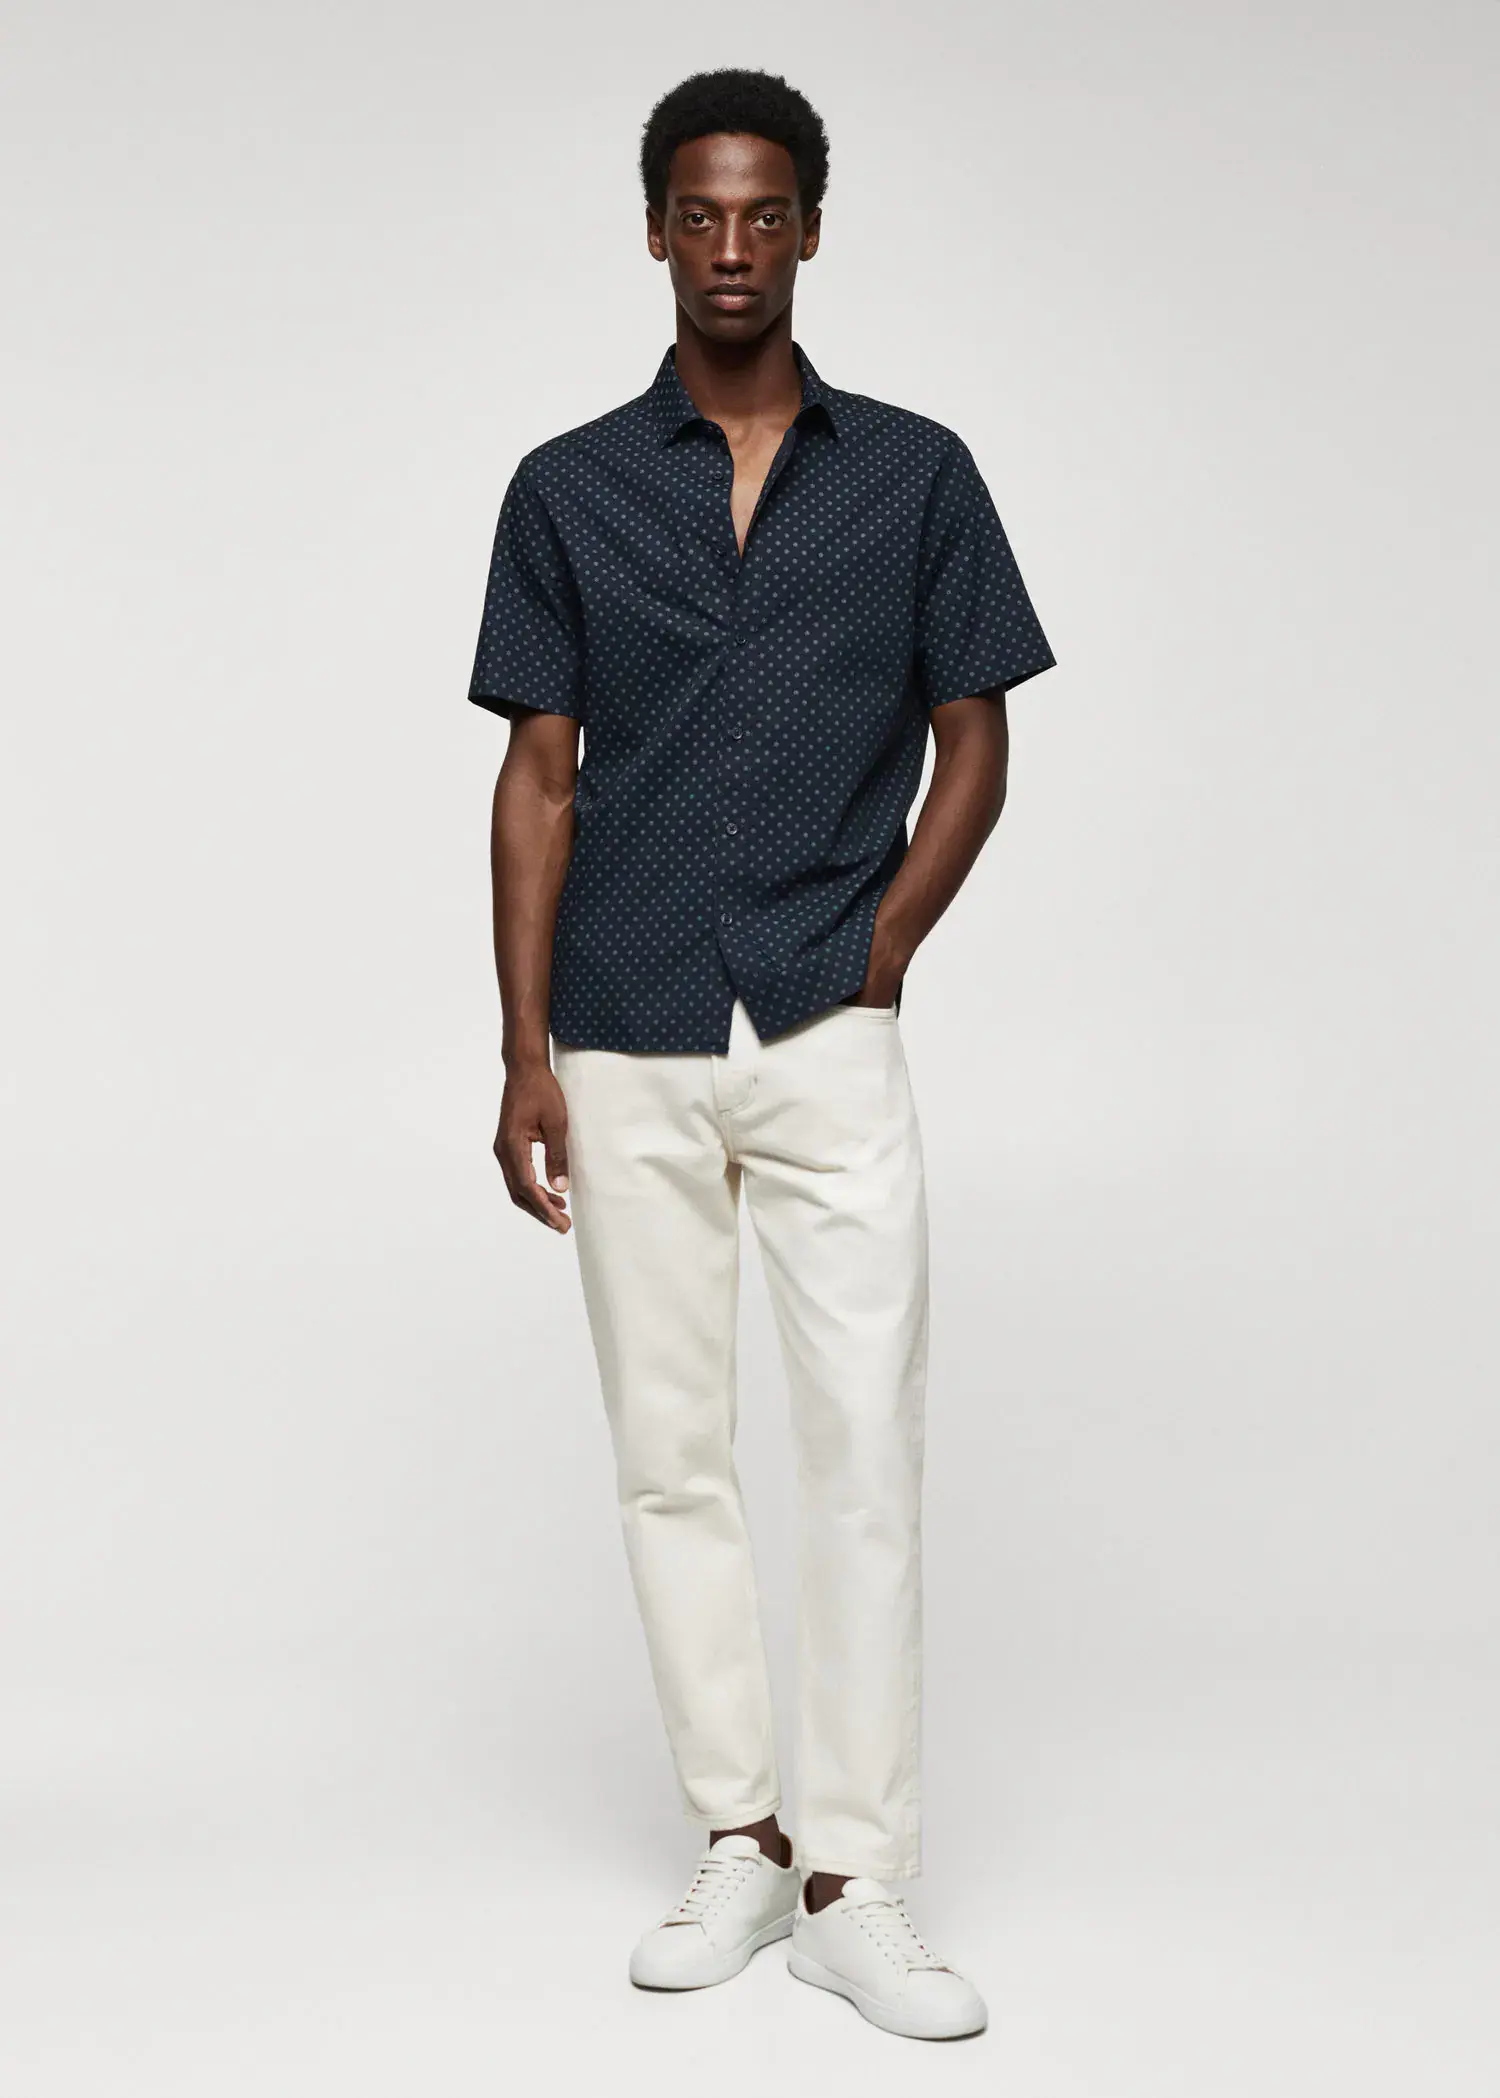 Mango 100% cotton short-sleeved floral shirt. 2